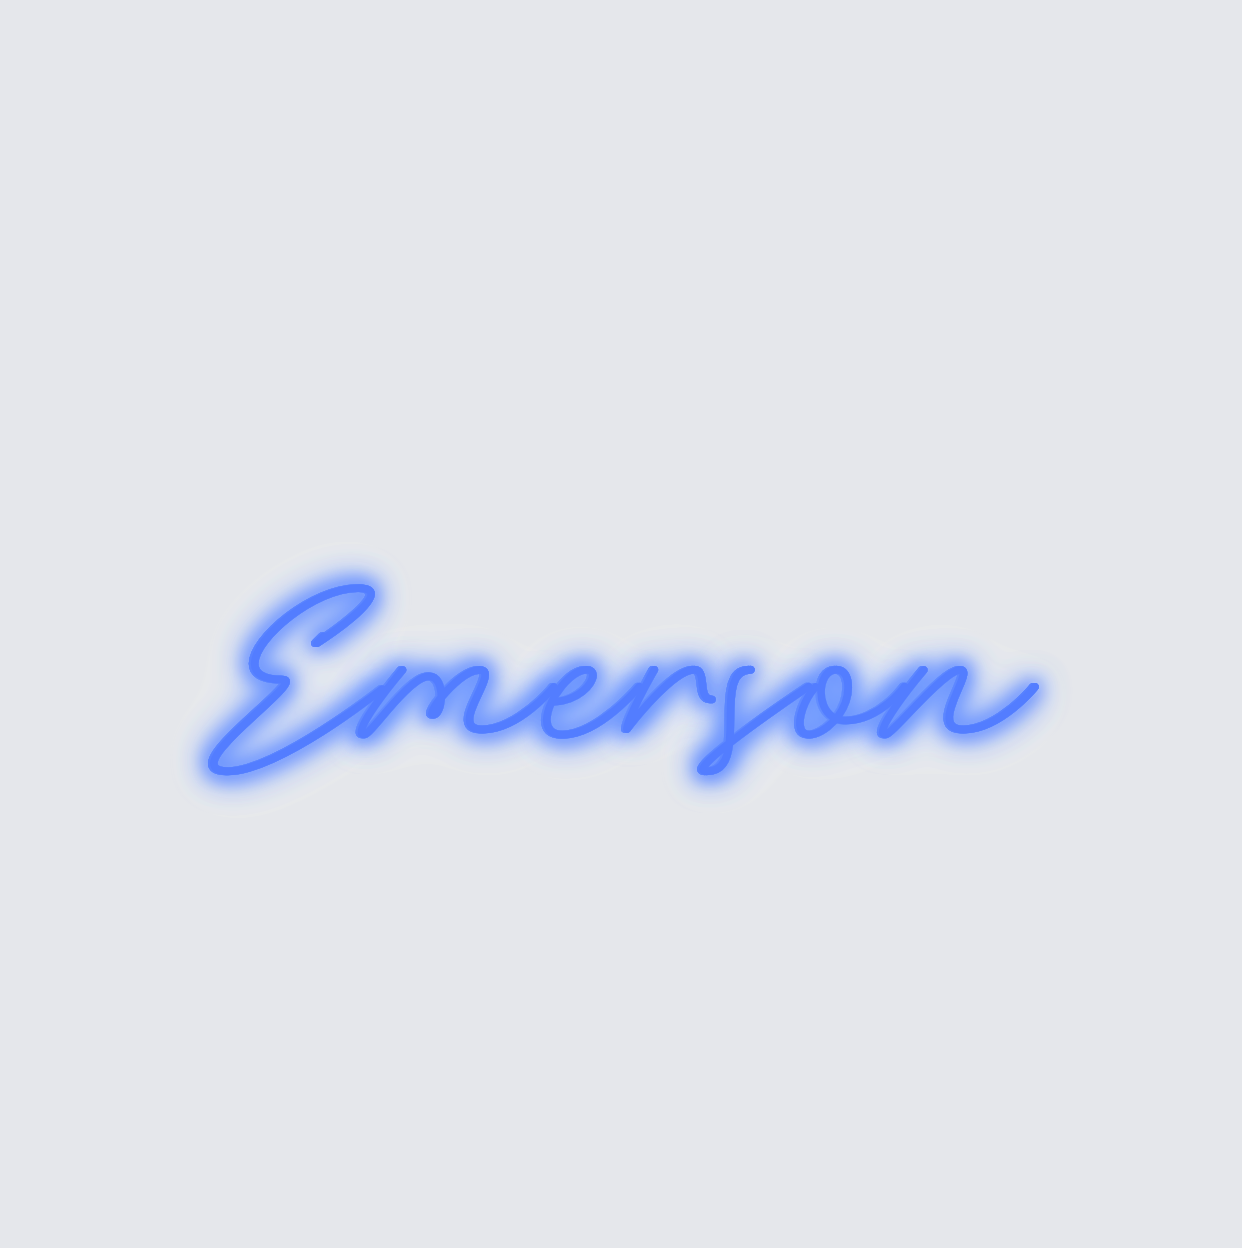 Custom neon sign - Emerson